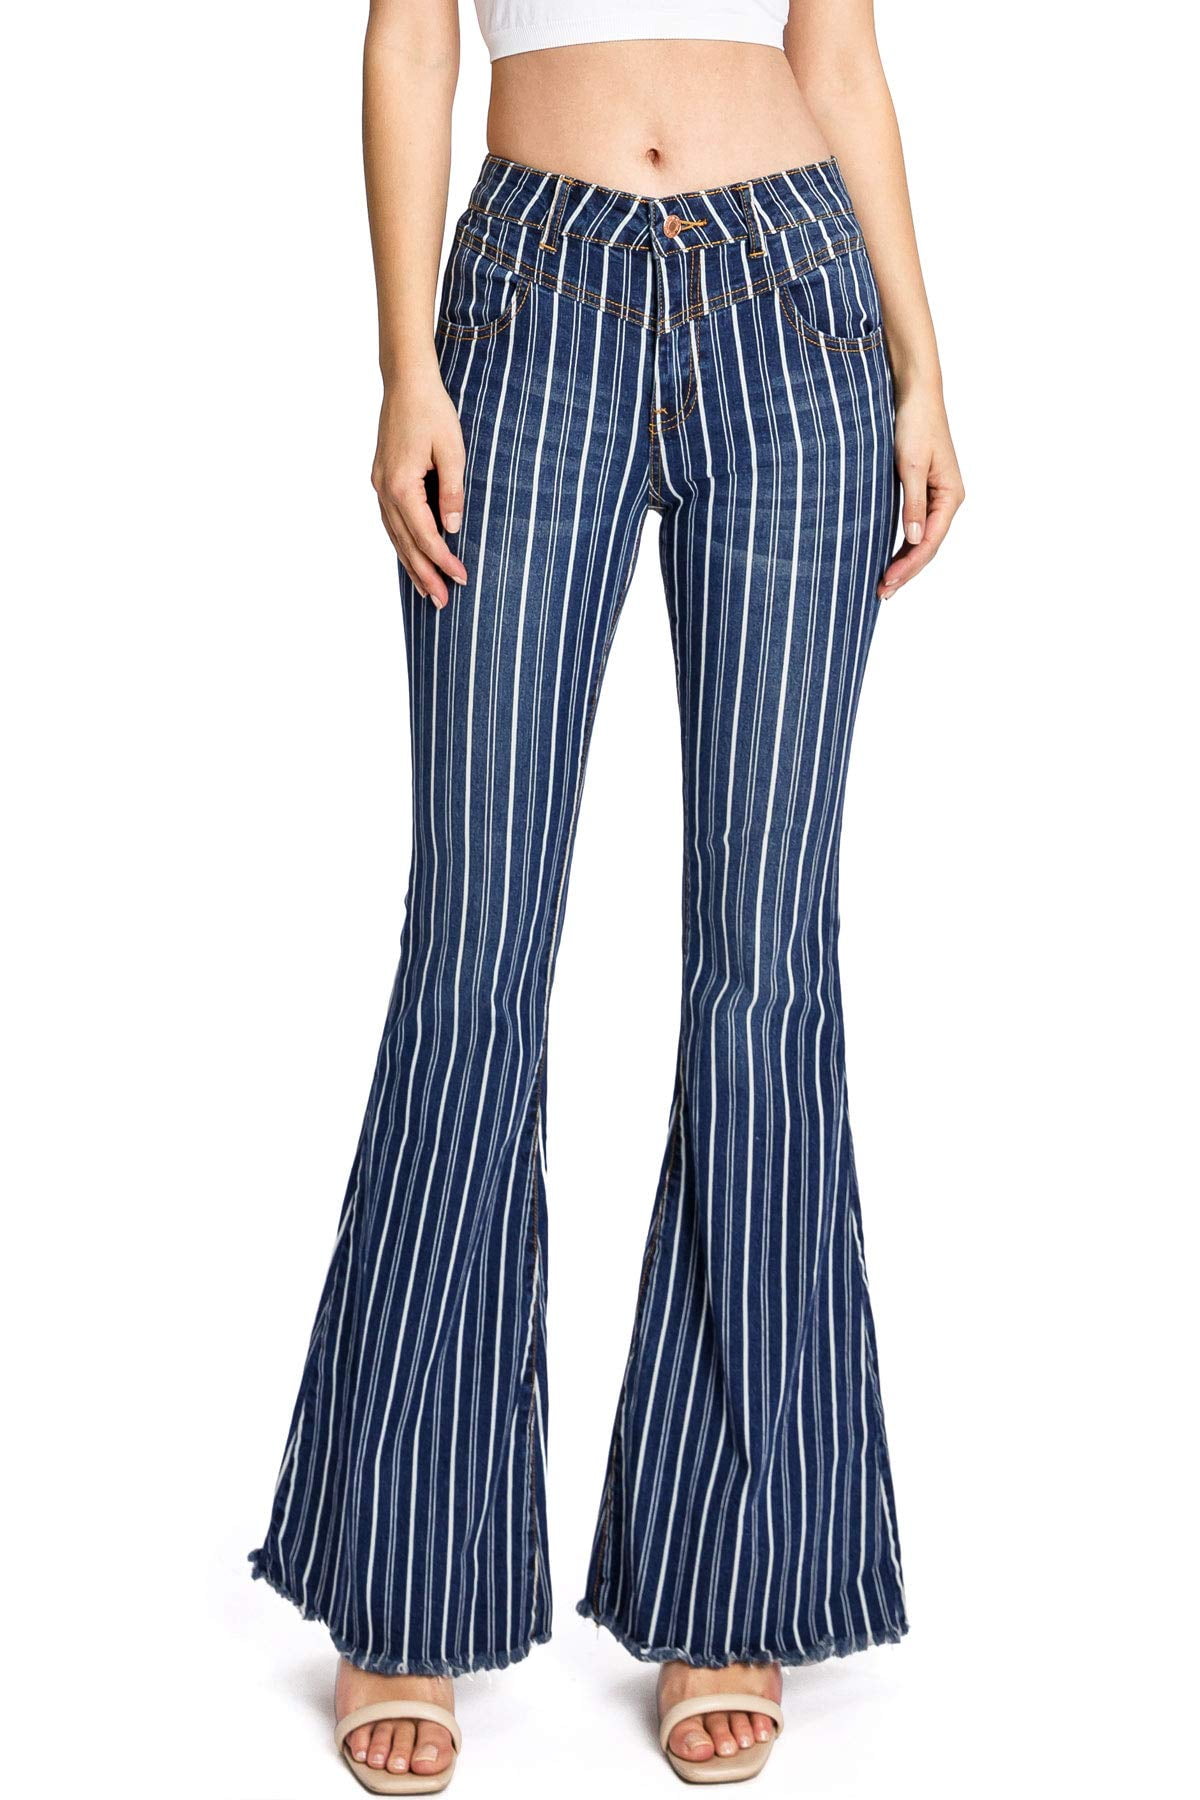 LITZ BY UNIQ Women's Juniors Stripe Bell Bottom Flare Jeans (28, Denim ...